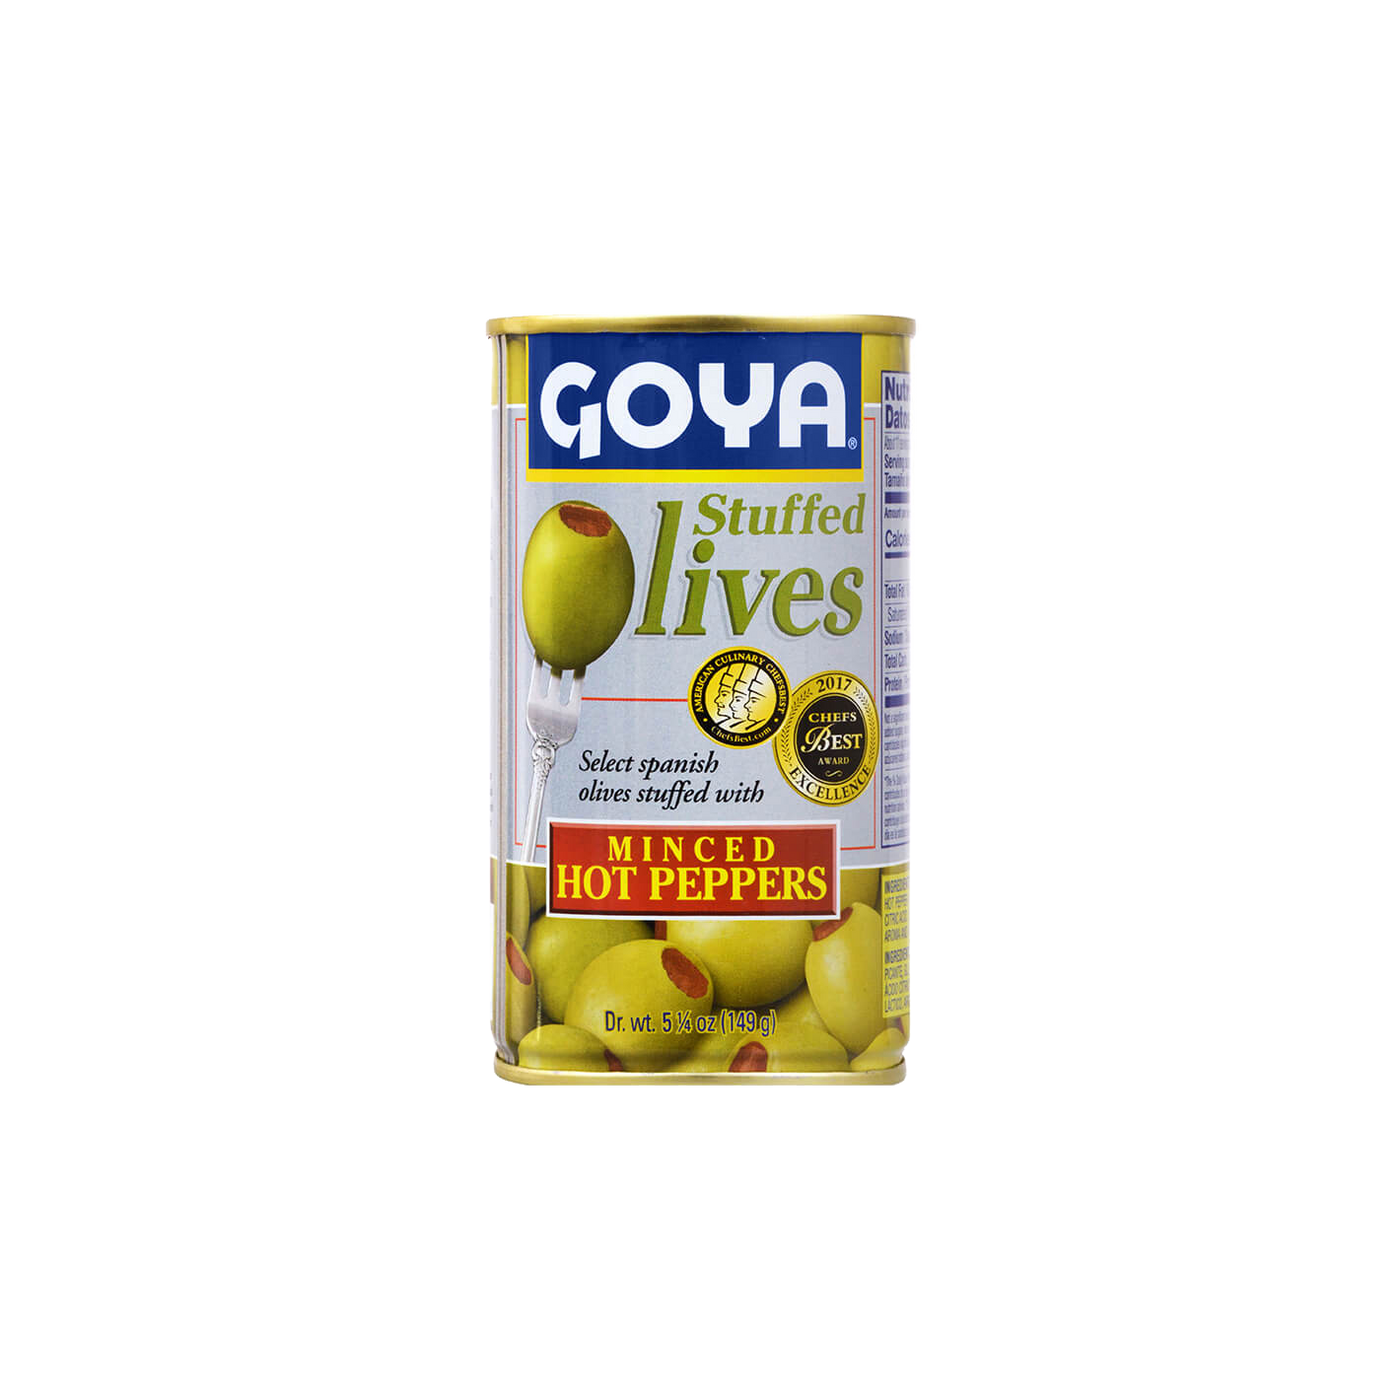   Goya Stuffed Olives Minced Hot Peppers